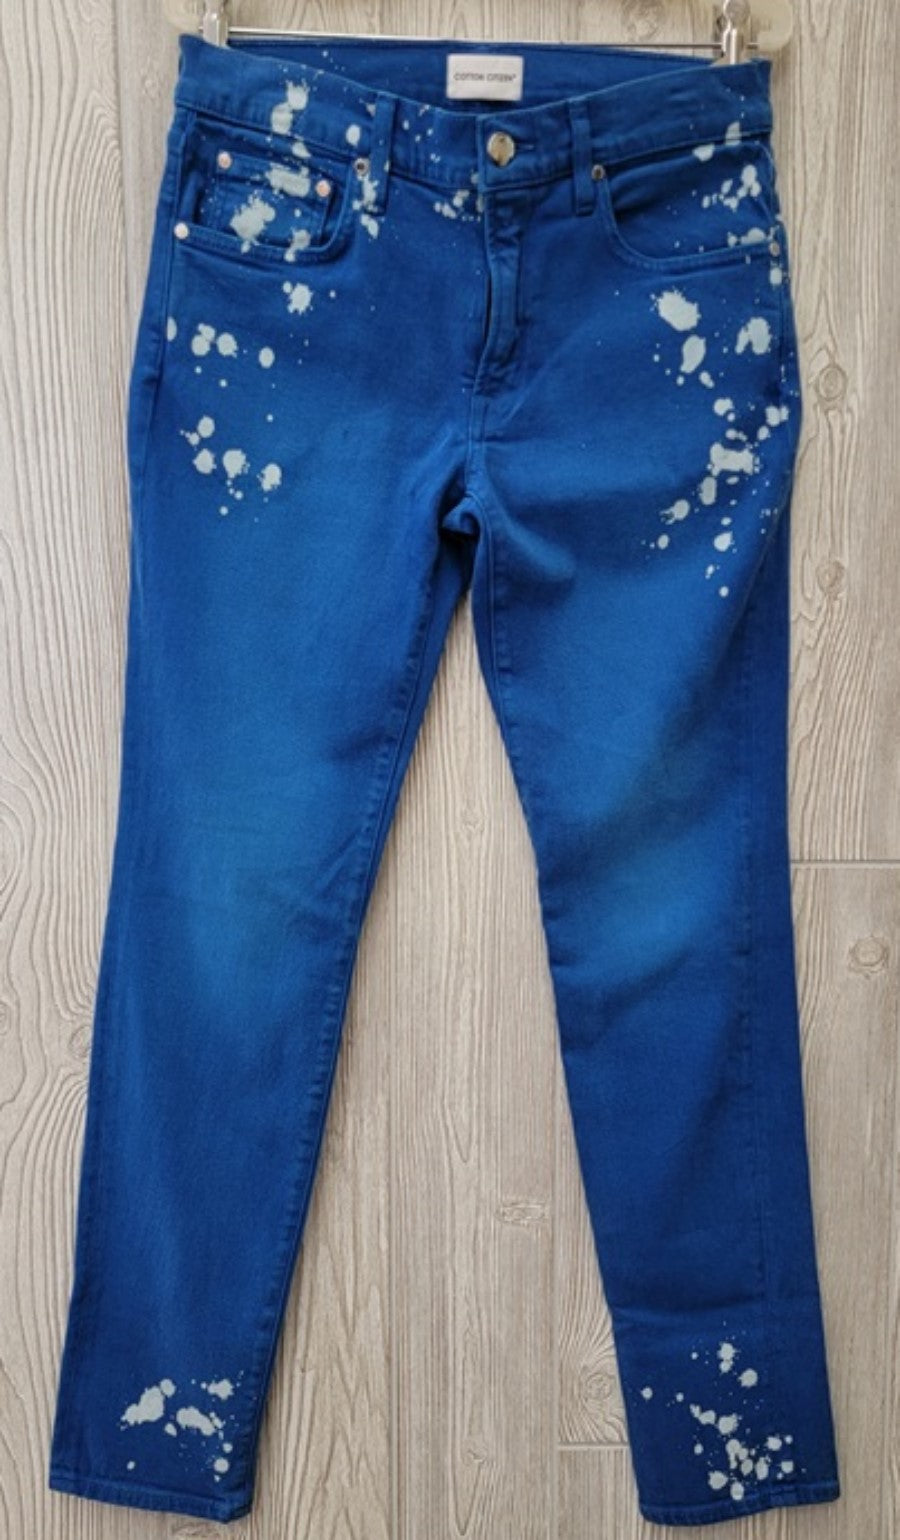 NWT Cotton Citizen 29 Splash Straight Fit Jeans Bright Blue 92966